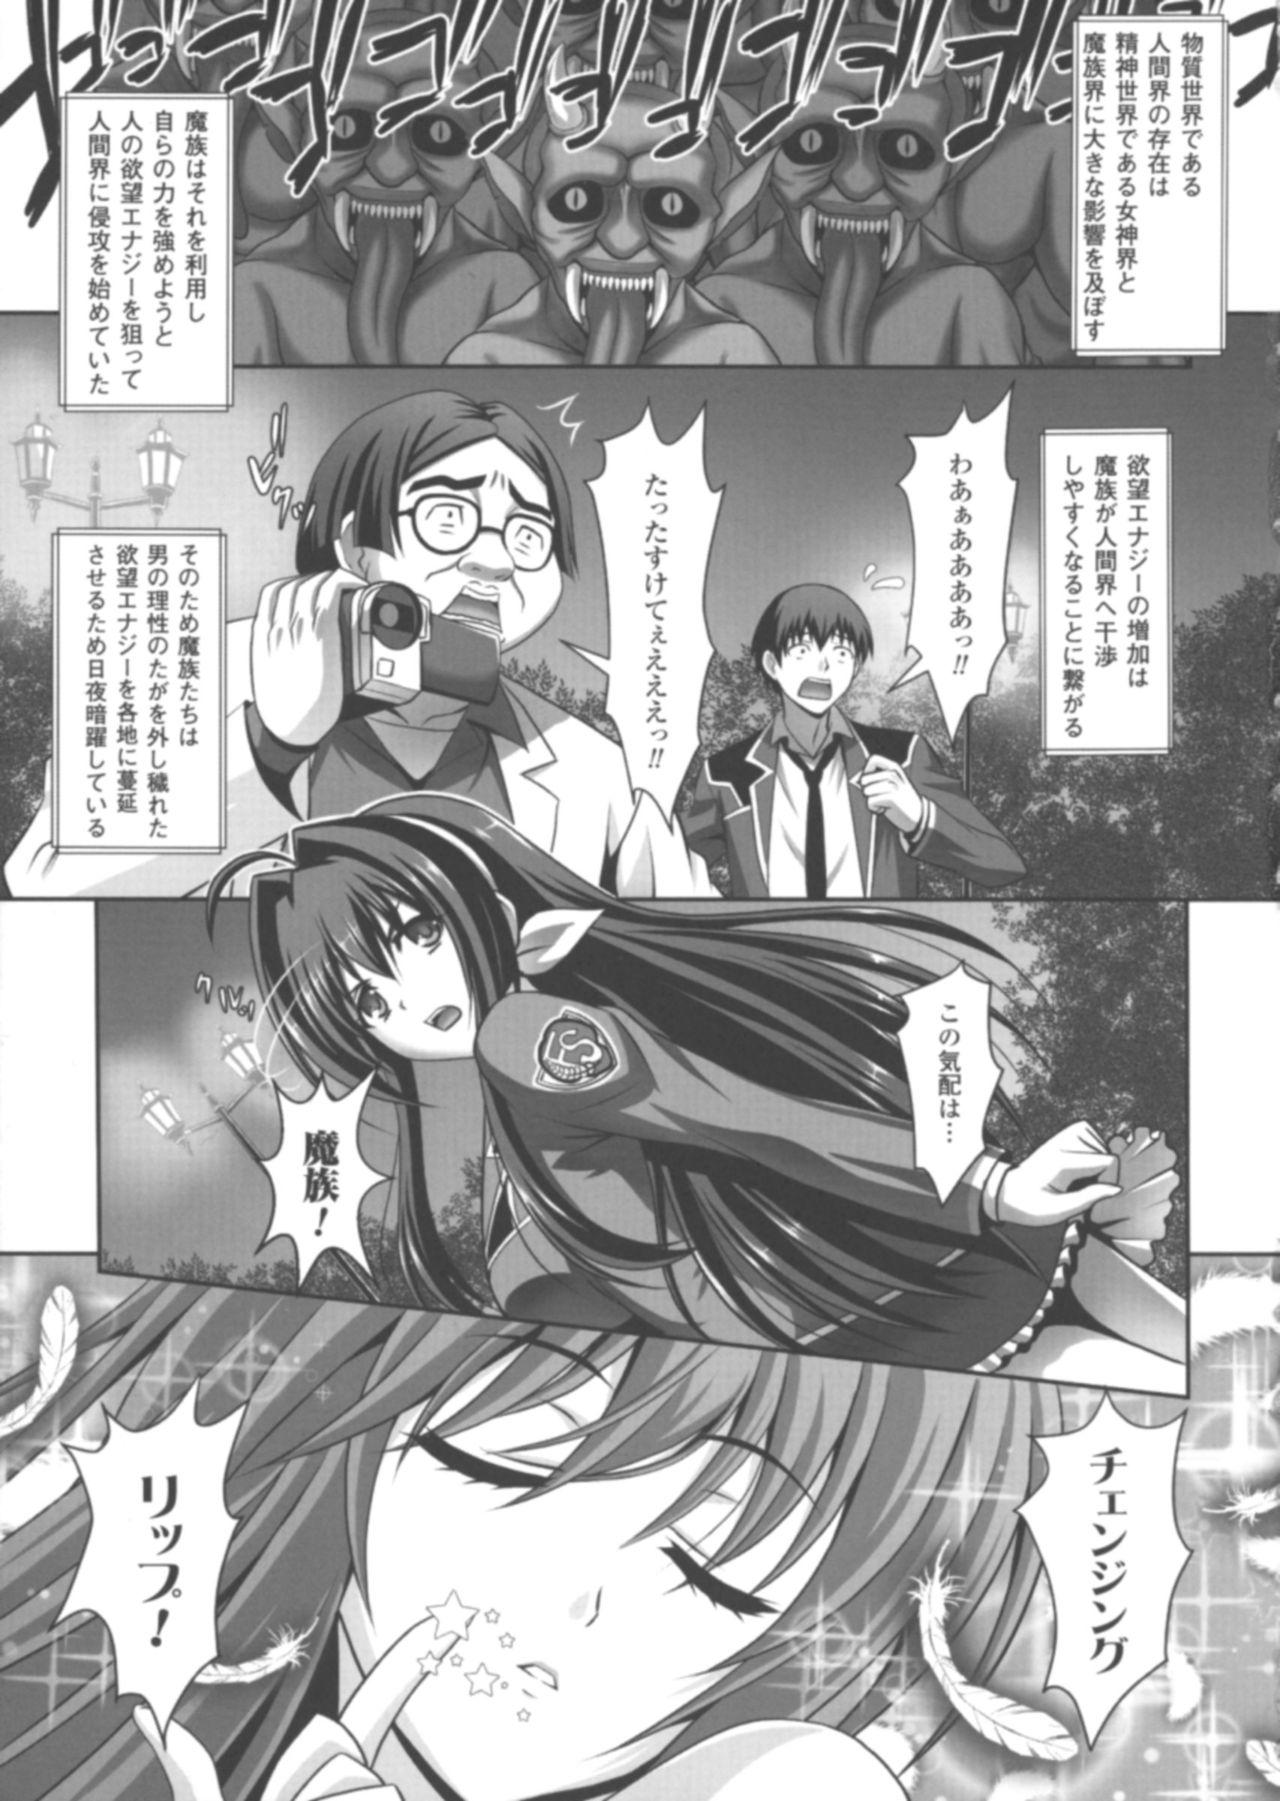 Seigi no Heroine Kangoku File DX Vol. 3 4